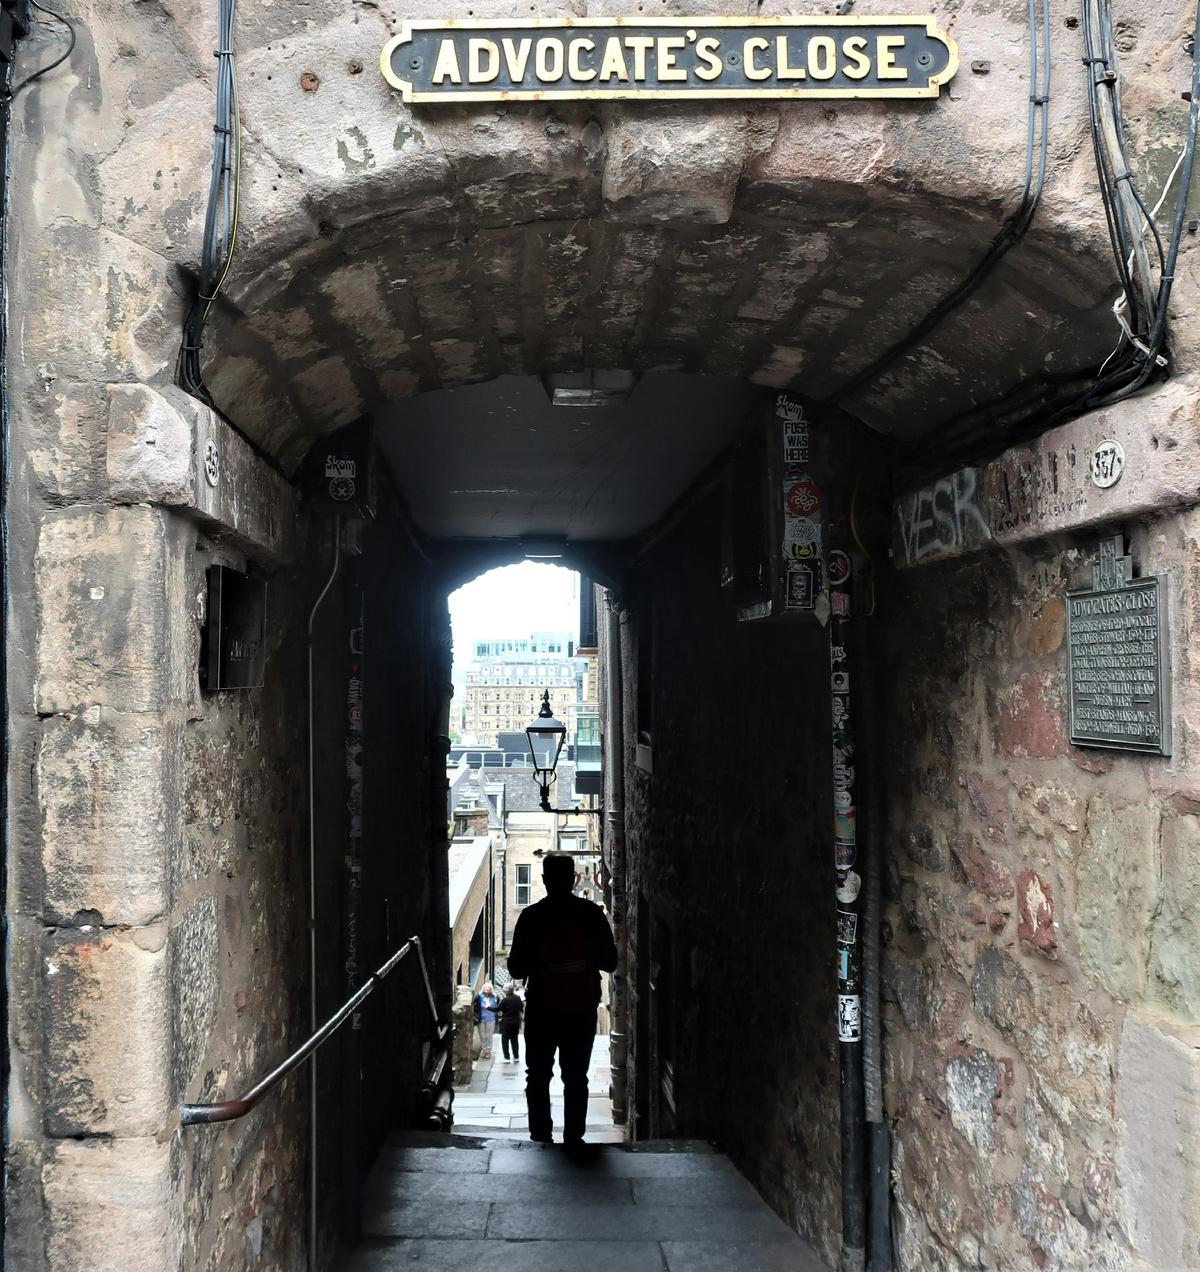 Advocate’s Close is one of many such underground thoroughfares in Edinburgh, Scotland. (Victor Block)